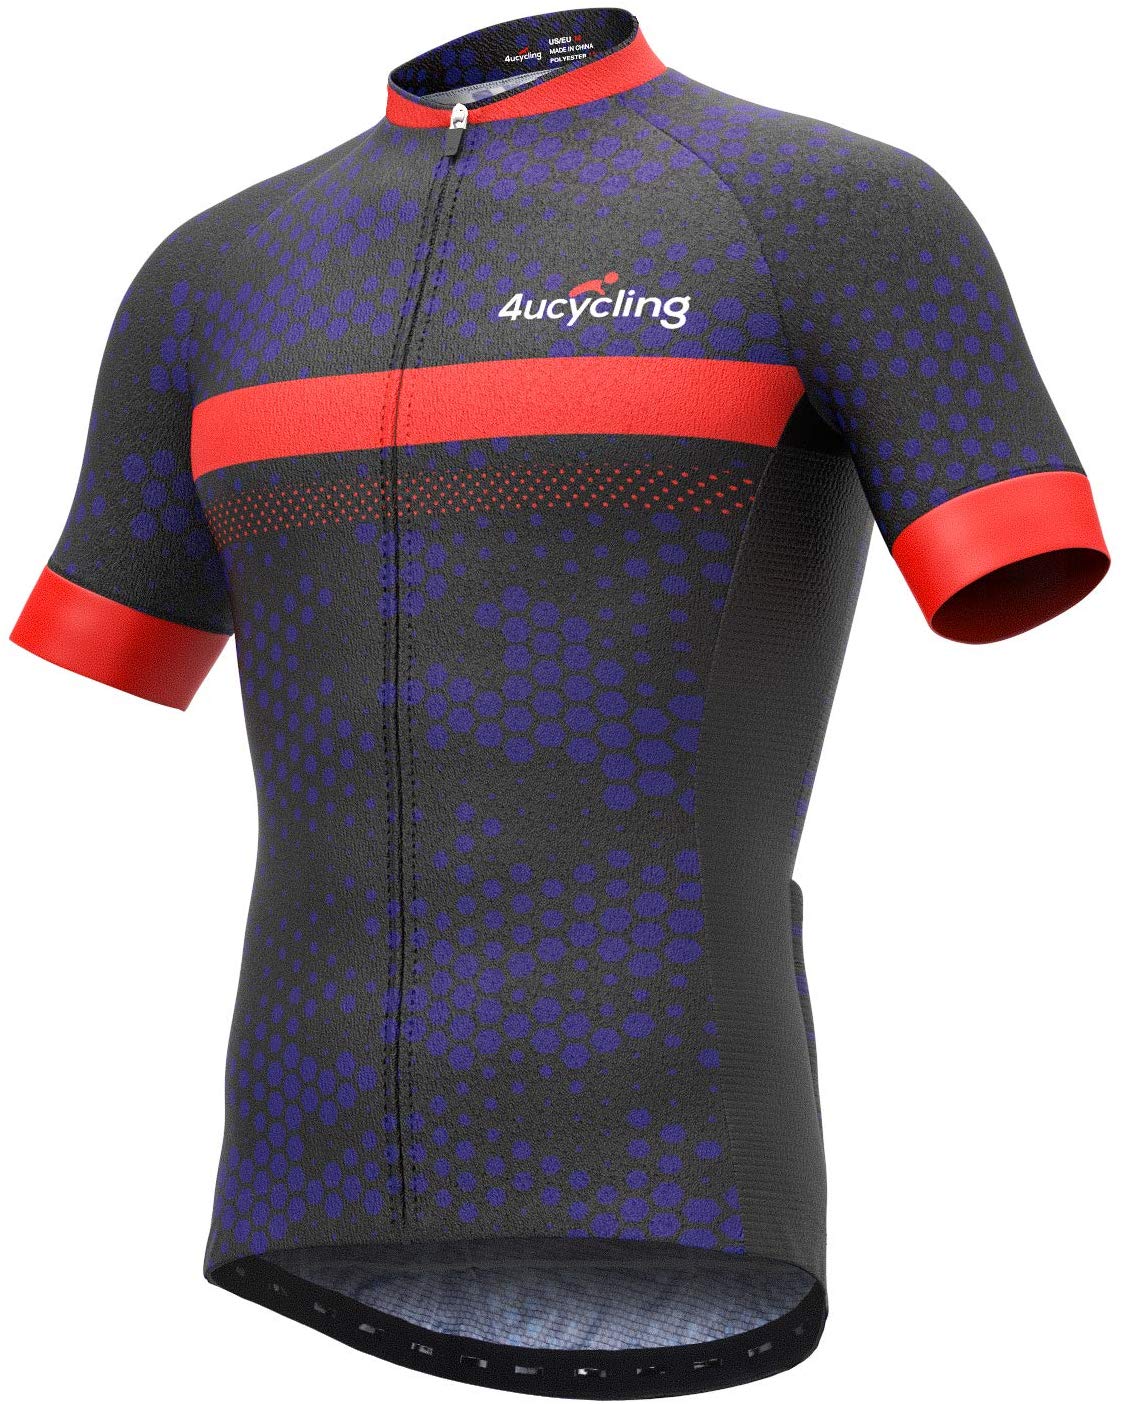 4UCycling Short/Long Sleeve Men's Cycling Jersey